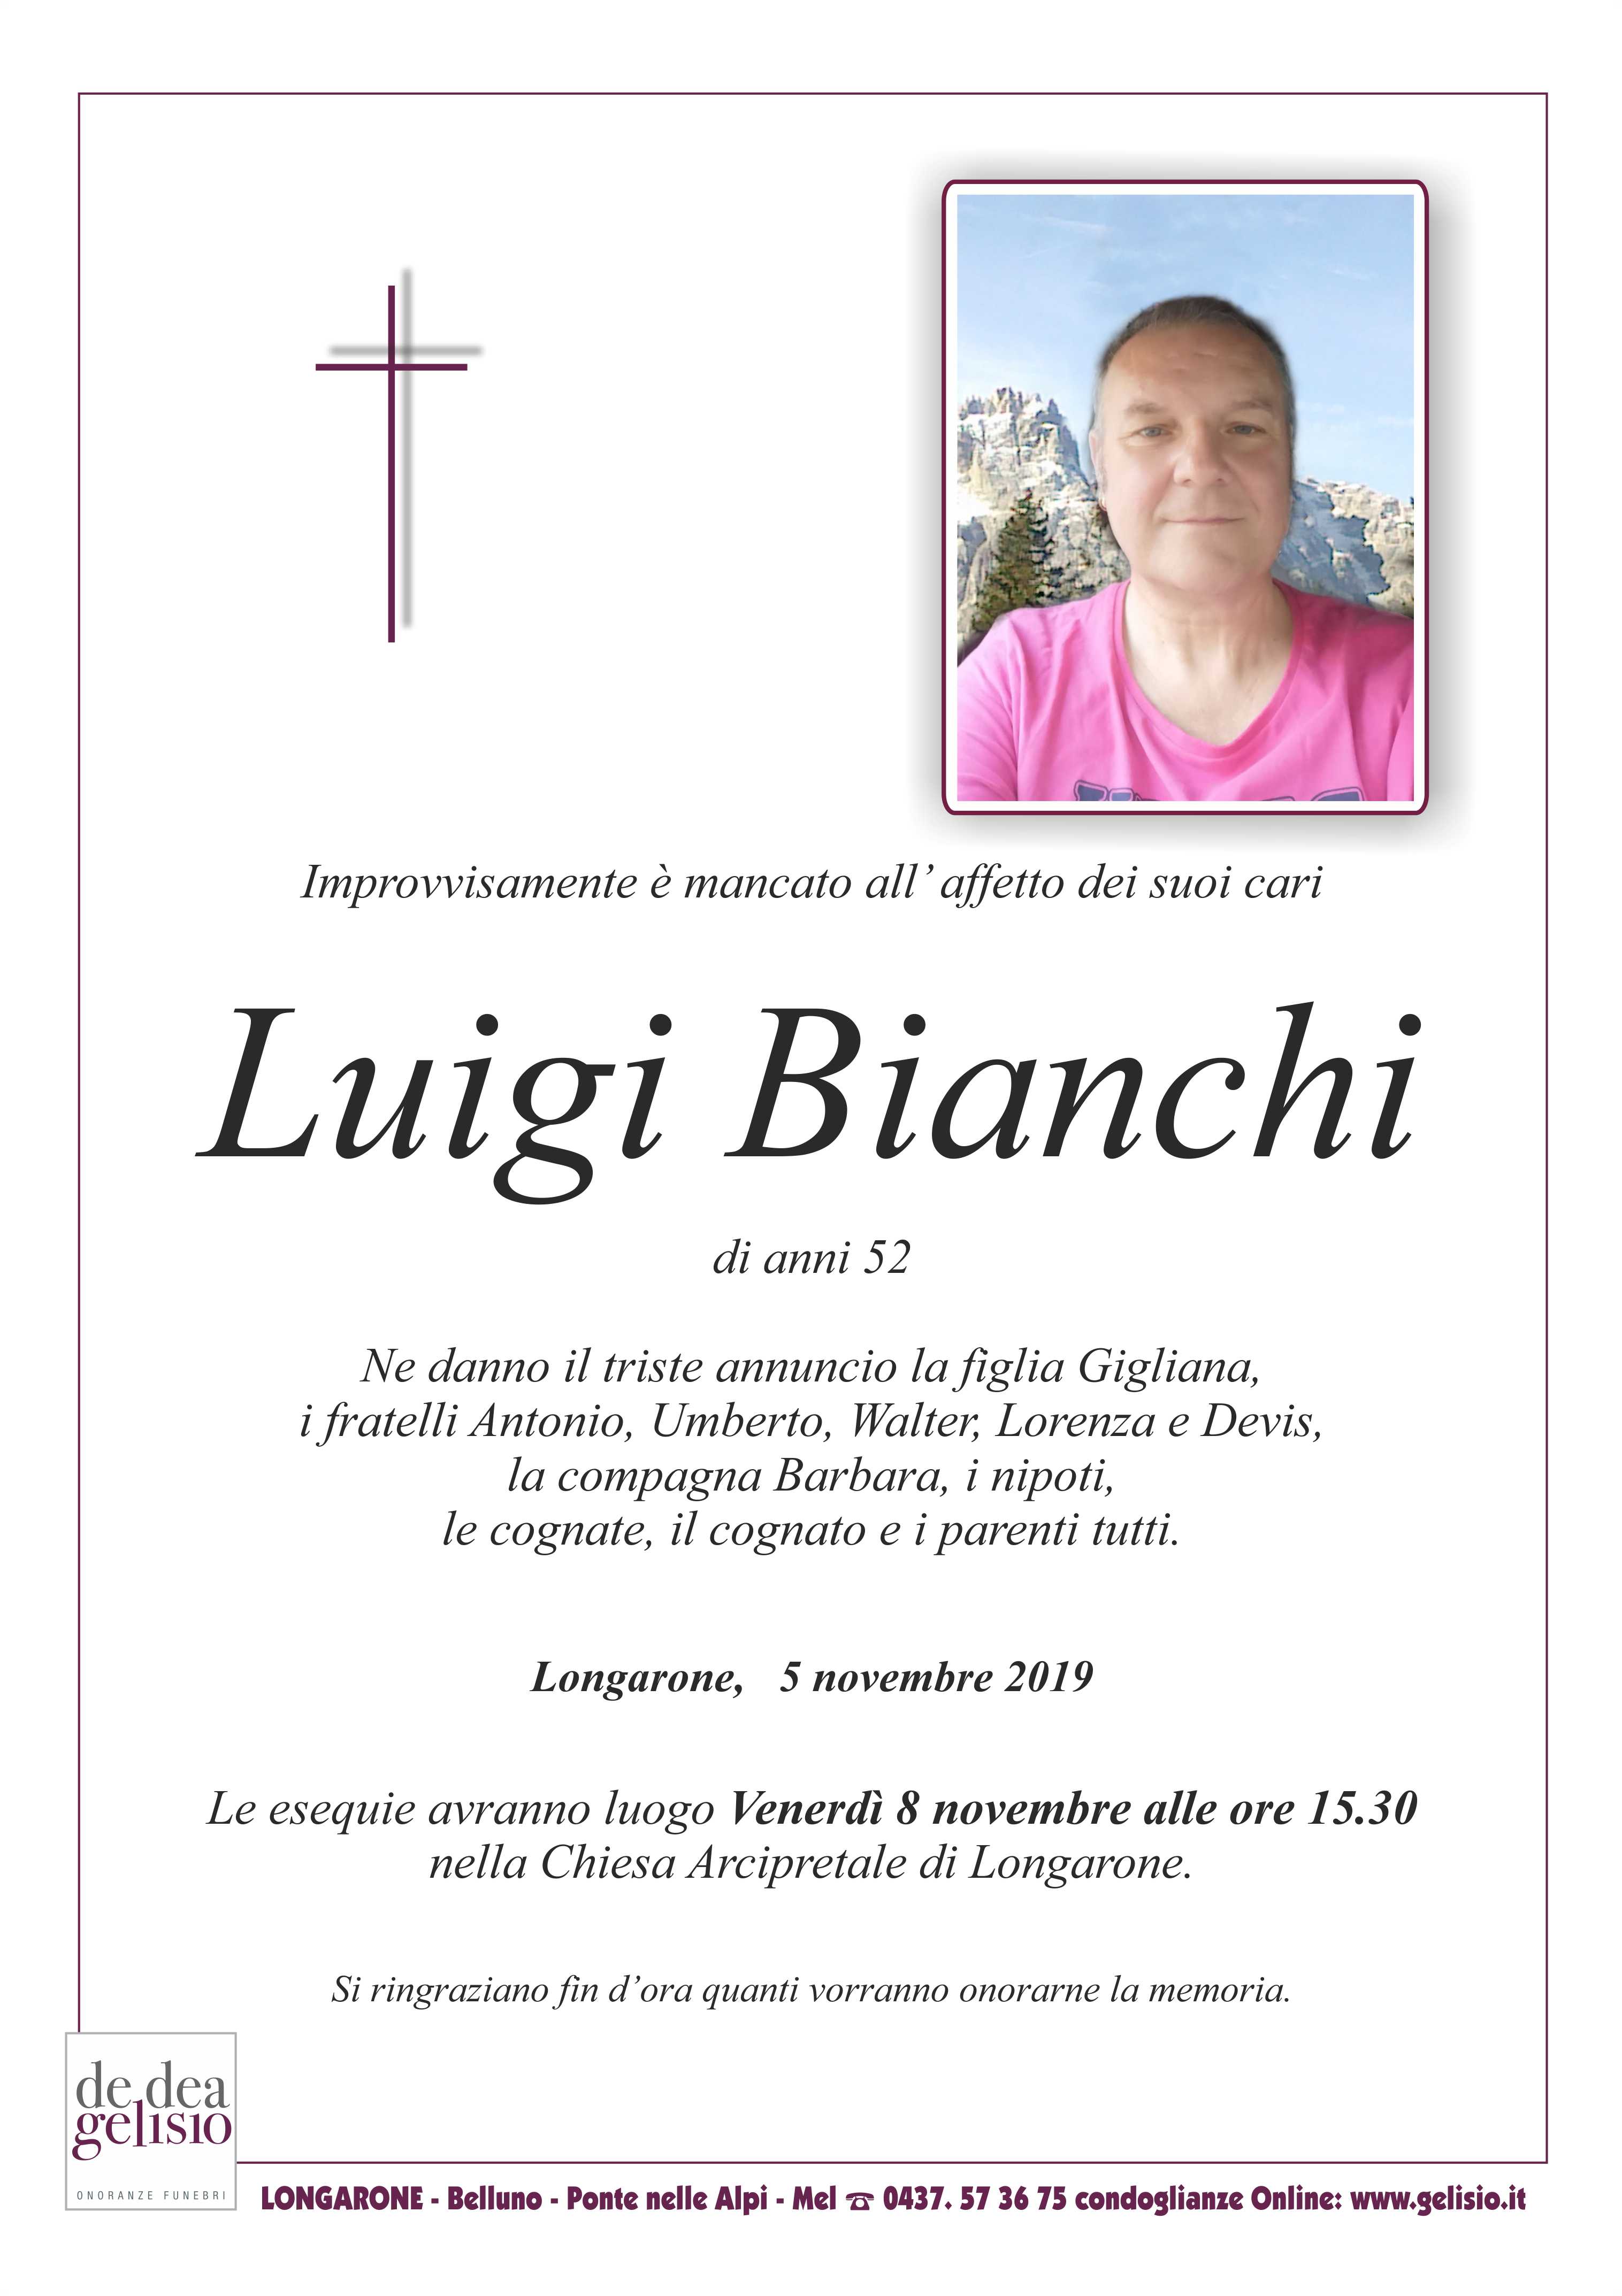 Bianchi Luigi